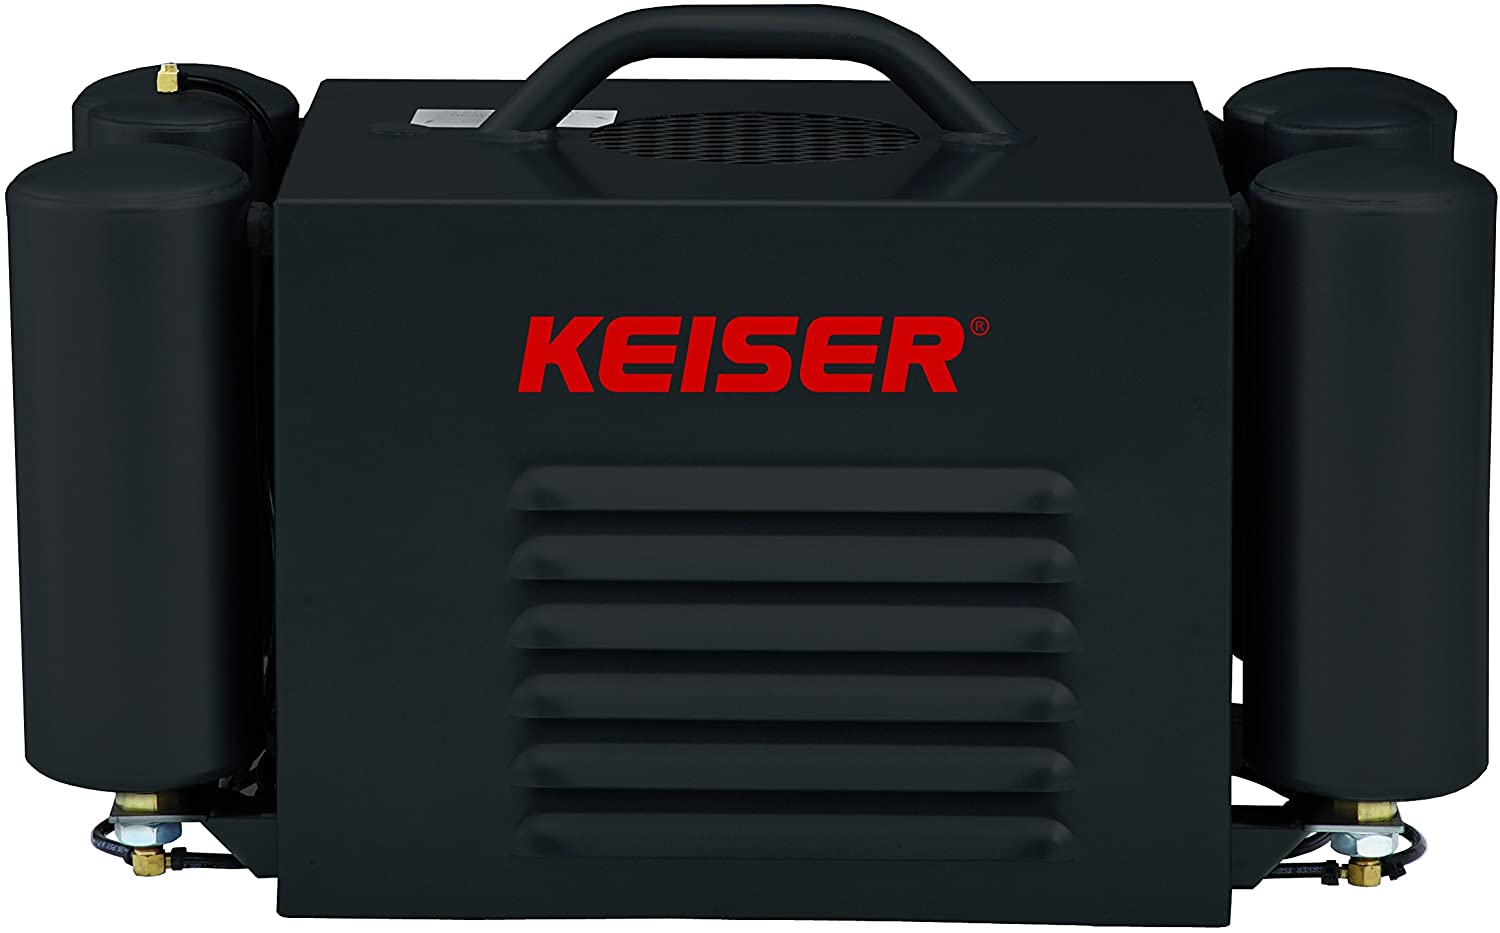 Keiser Quiet Compressor | Fitness Experience